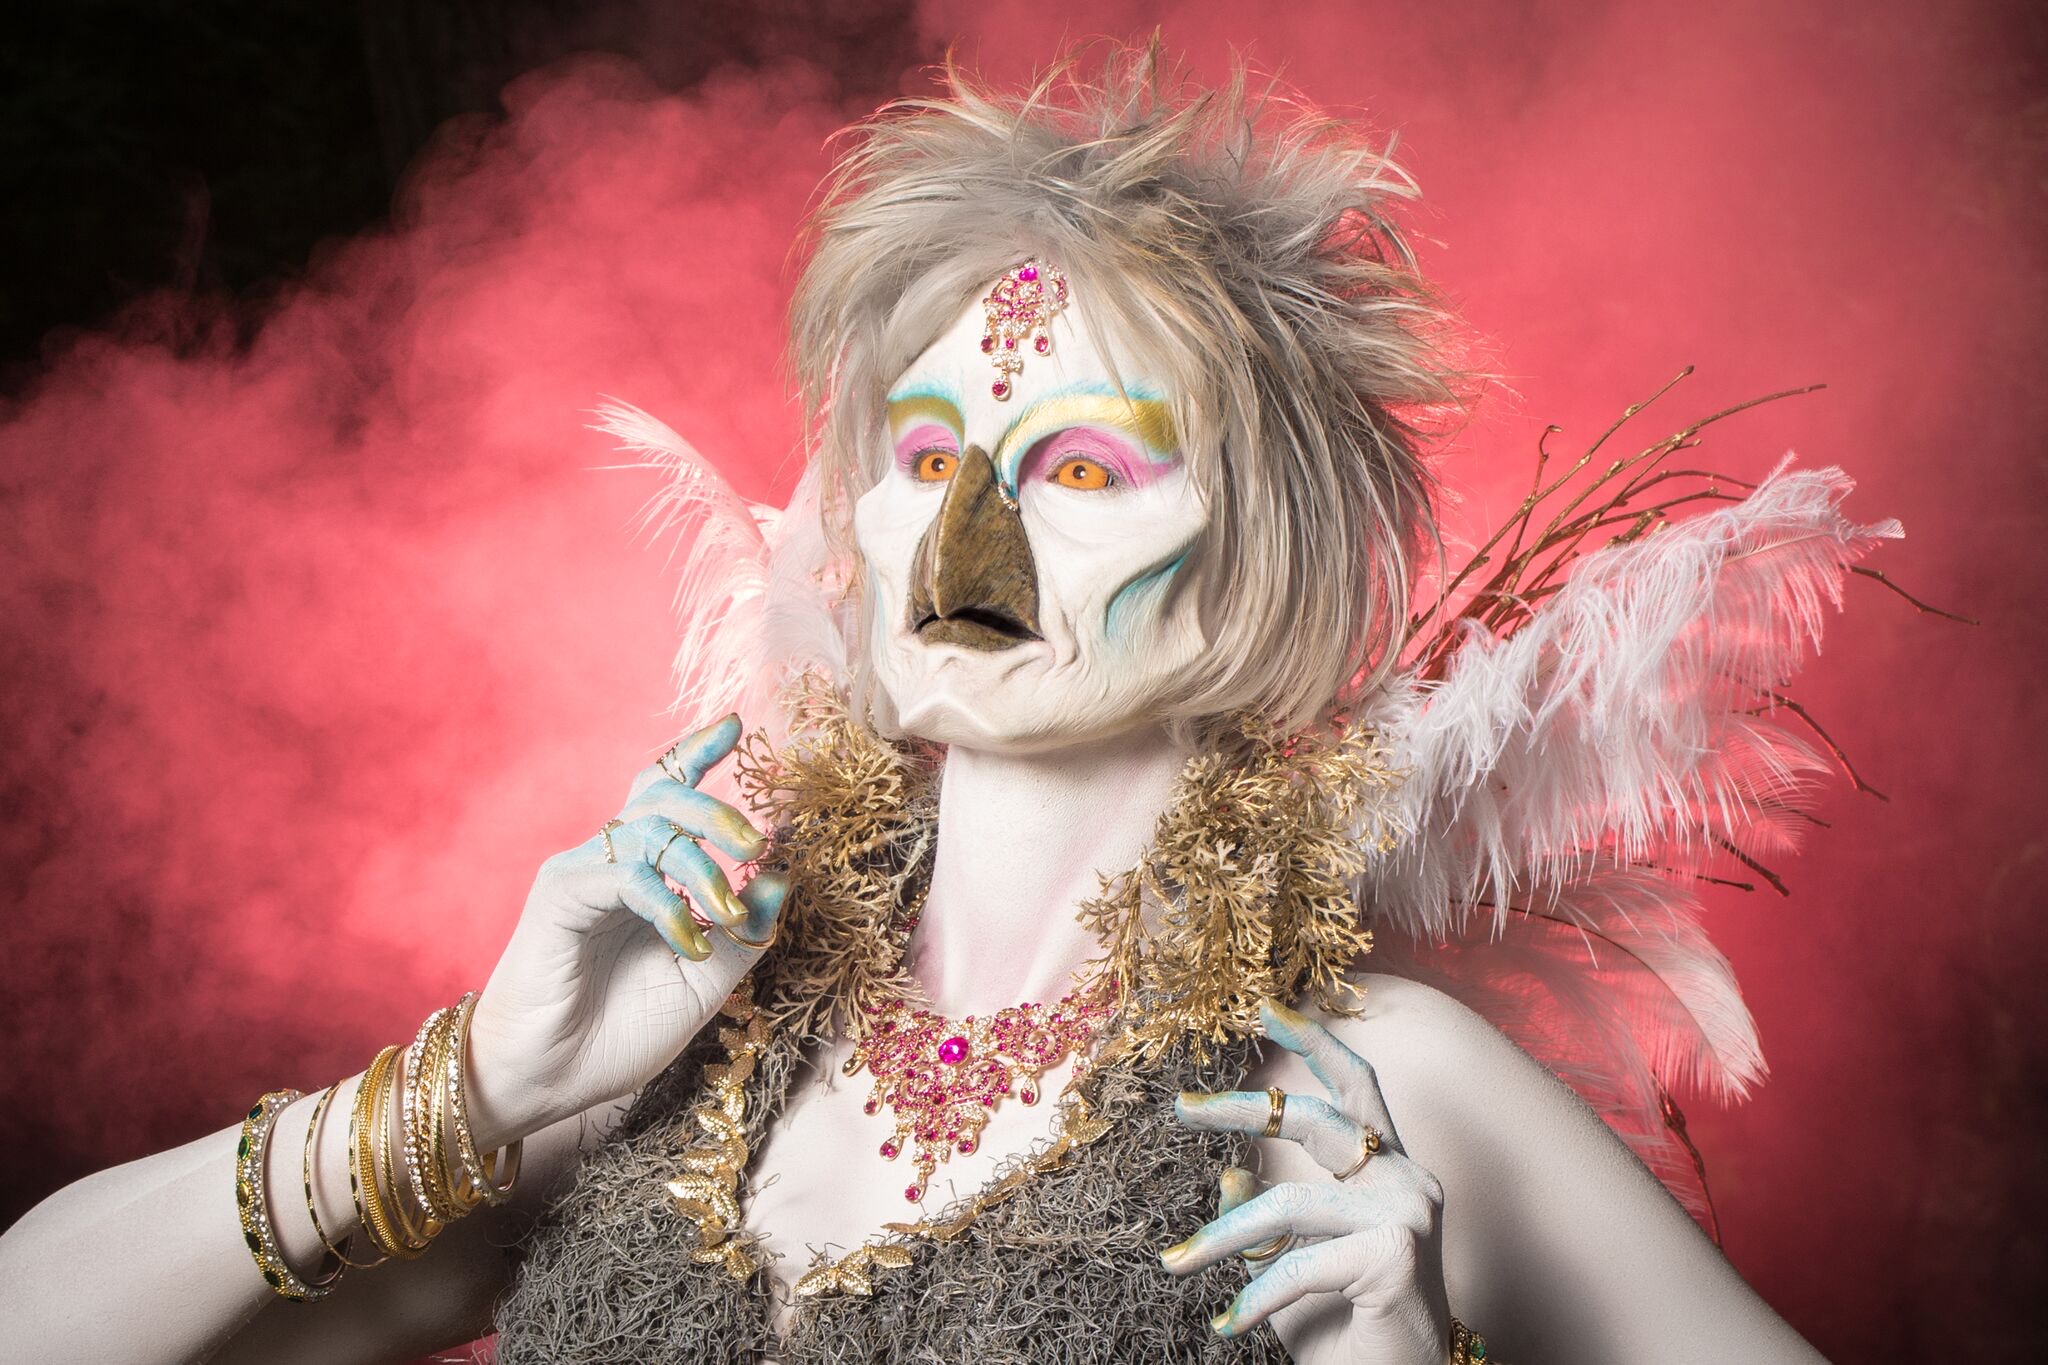 Teen SFX makeup artist creates terrifying characters